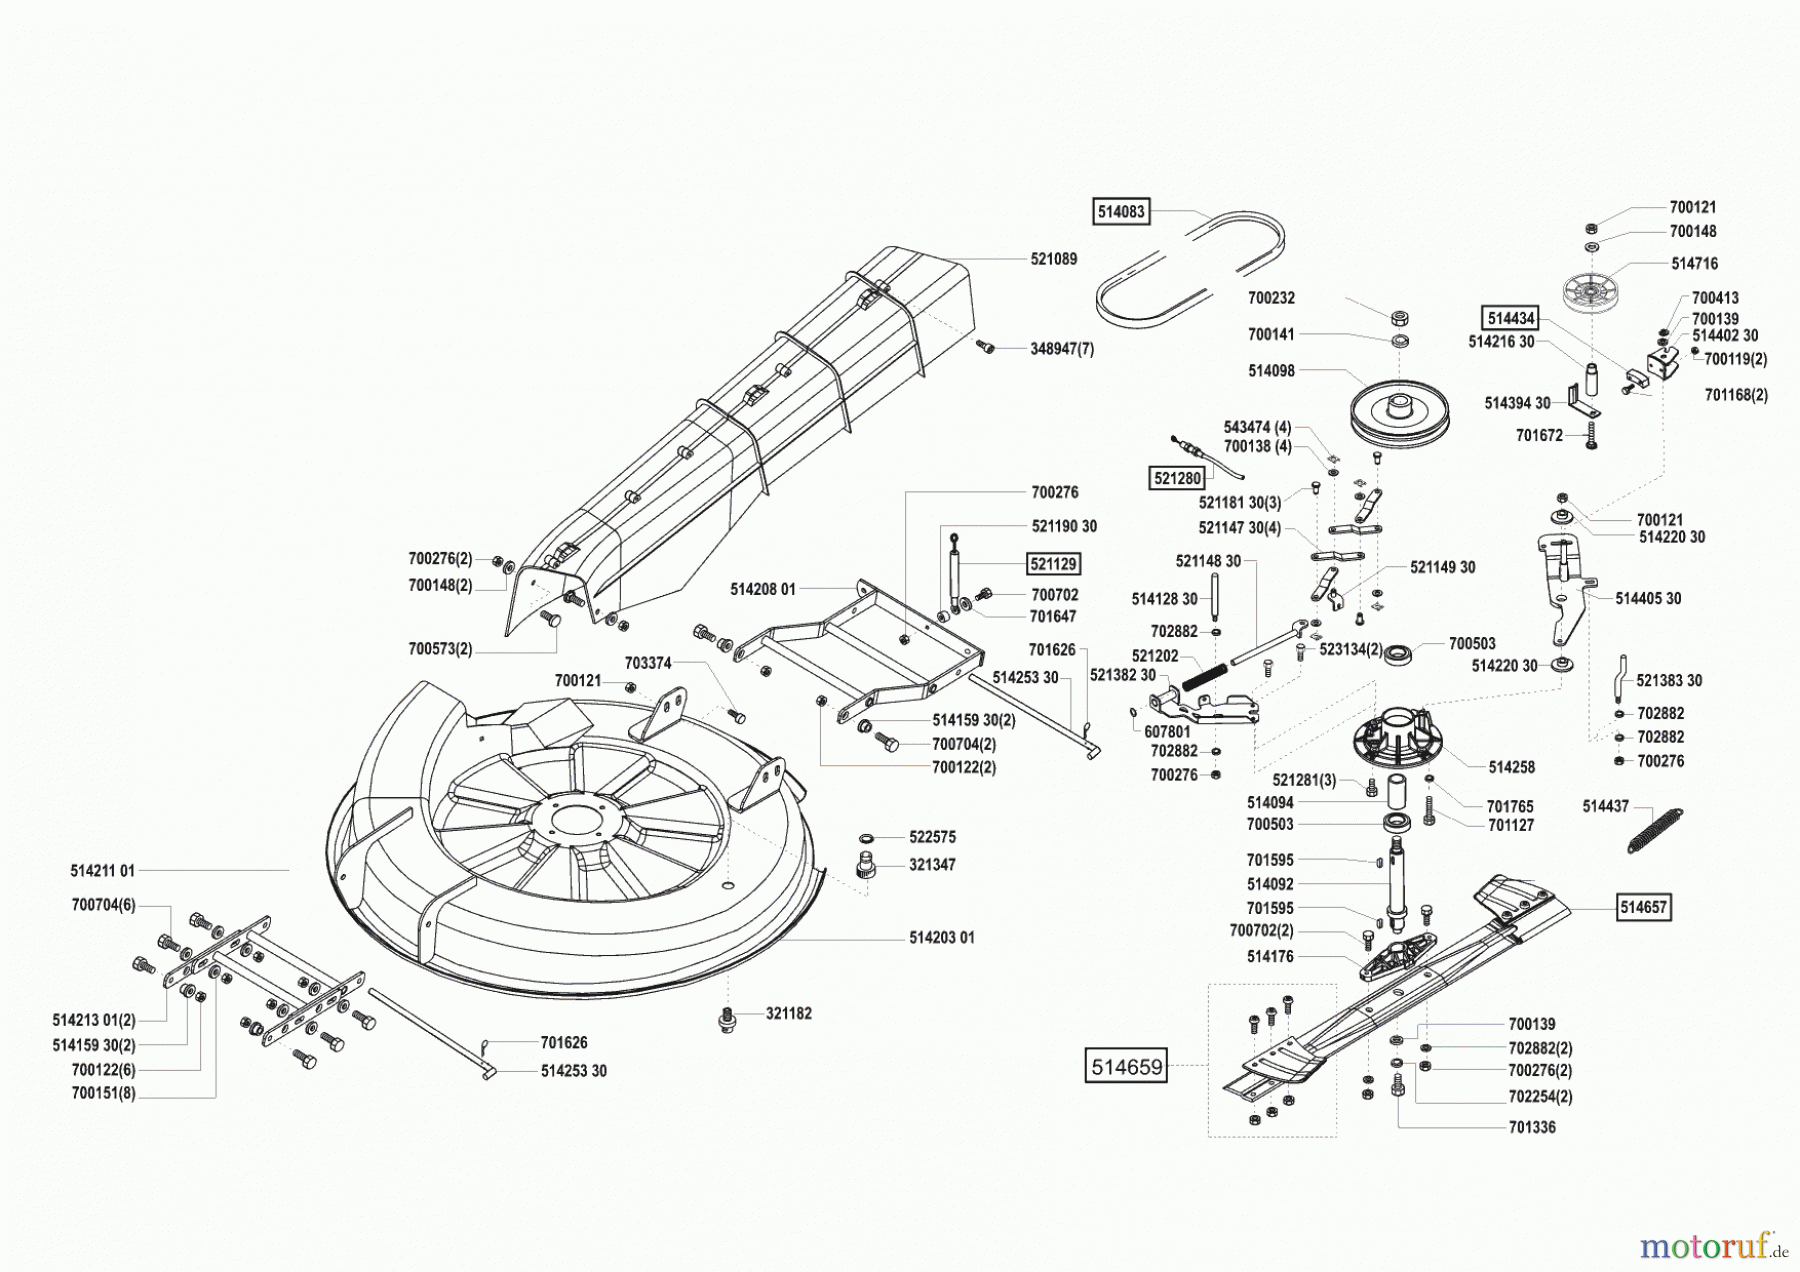  AL-KO Gartentechnik Rasentraktor T 10 vor 12/2001 Seite 5